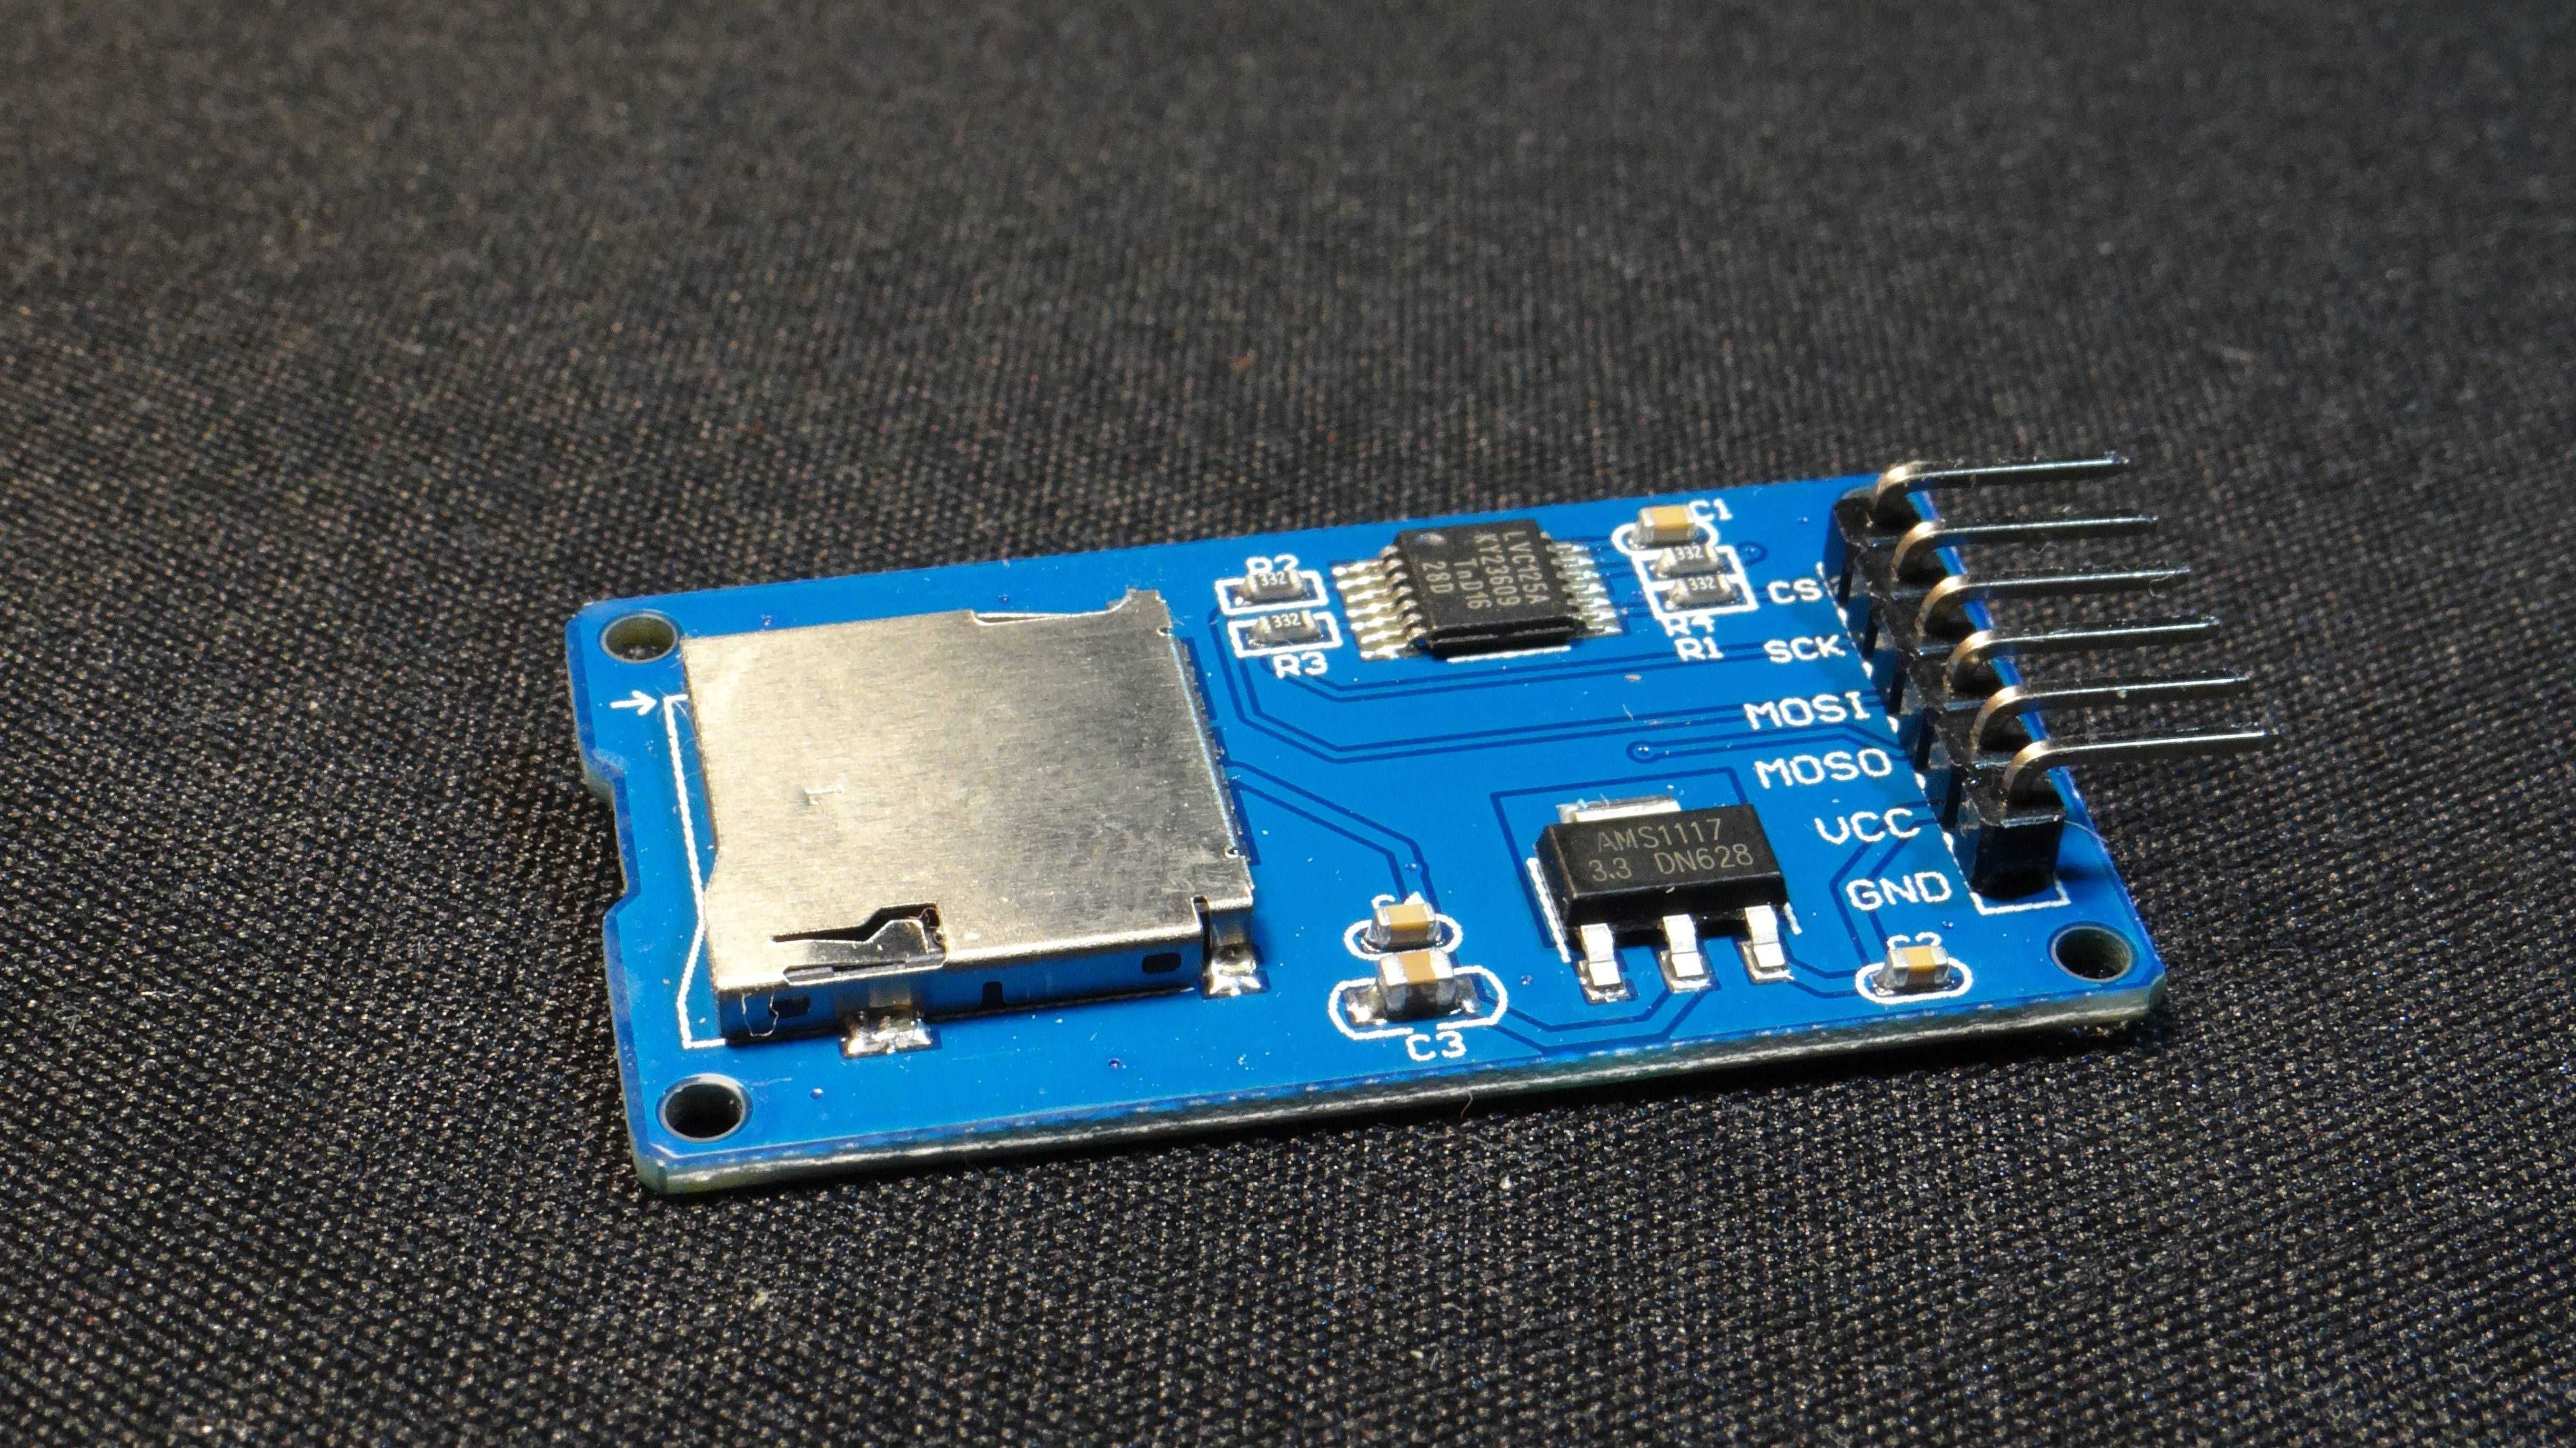 Модуль MicroSD TF Reader Arduino, ARM